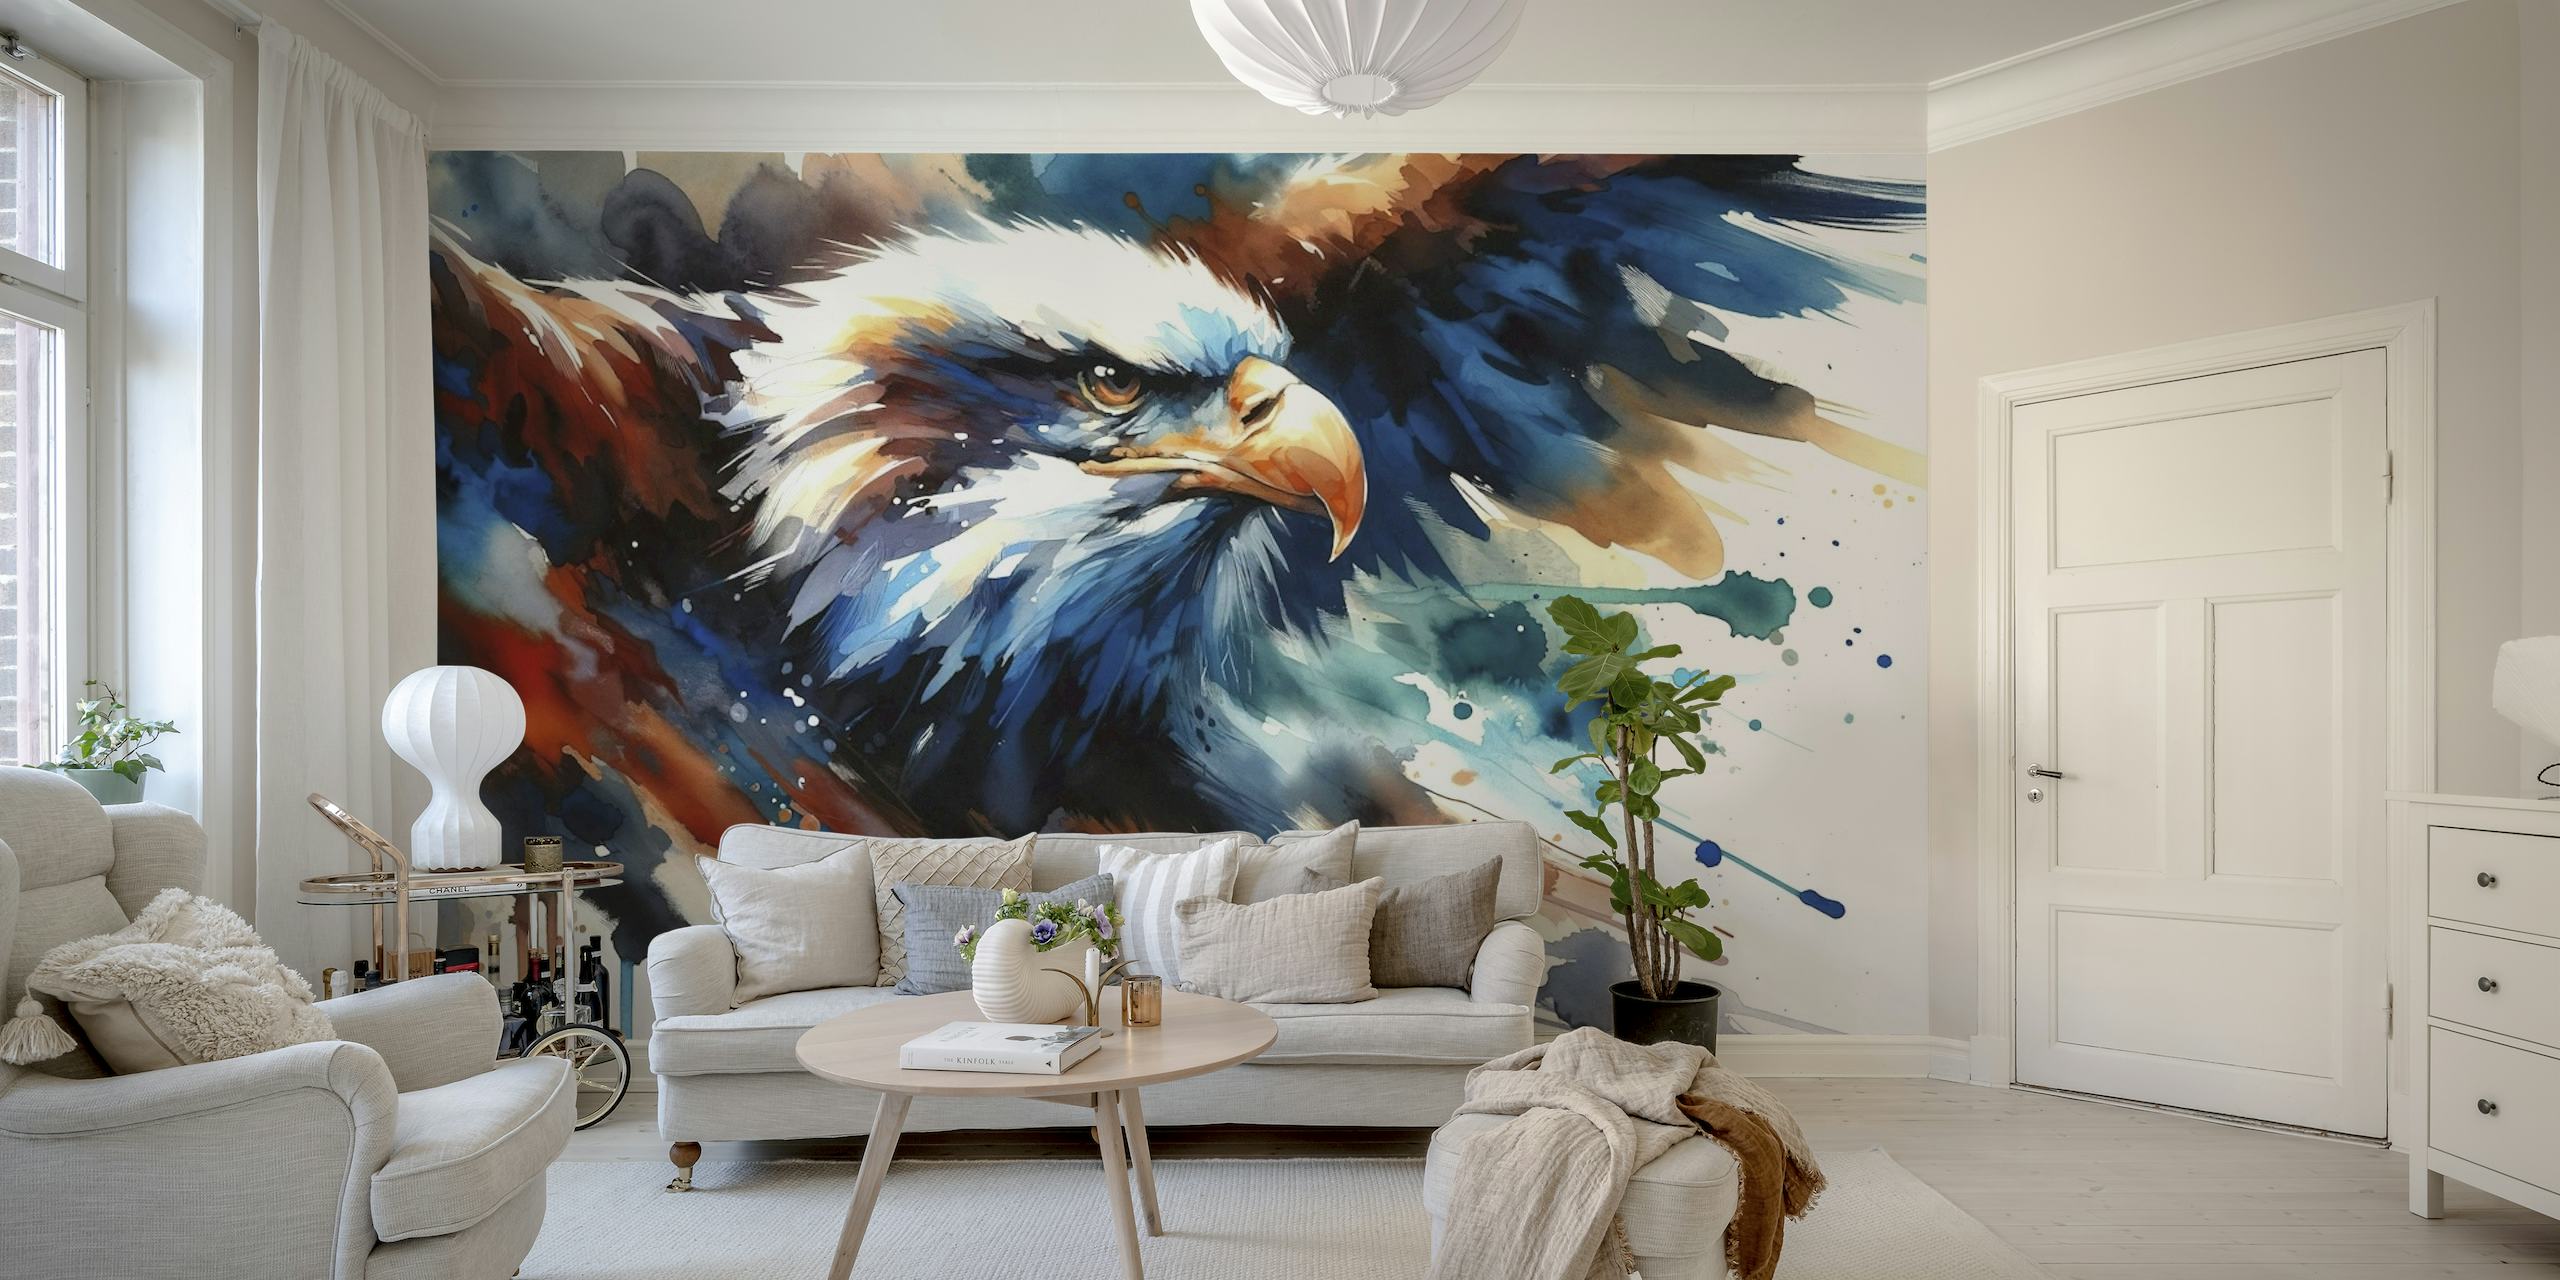 Soaring Majesty of the Eagle papel pintado